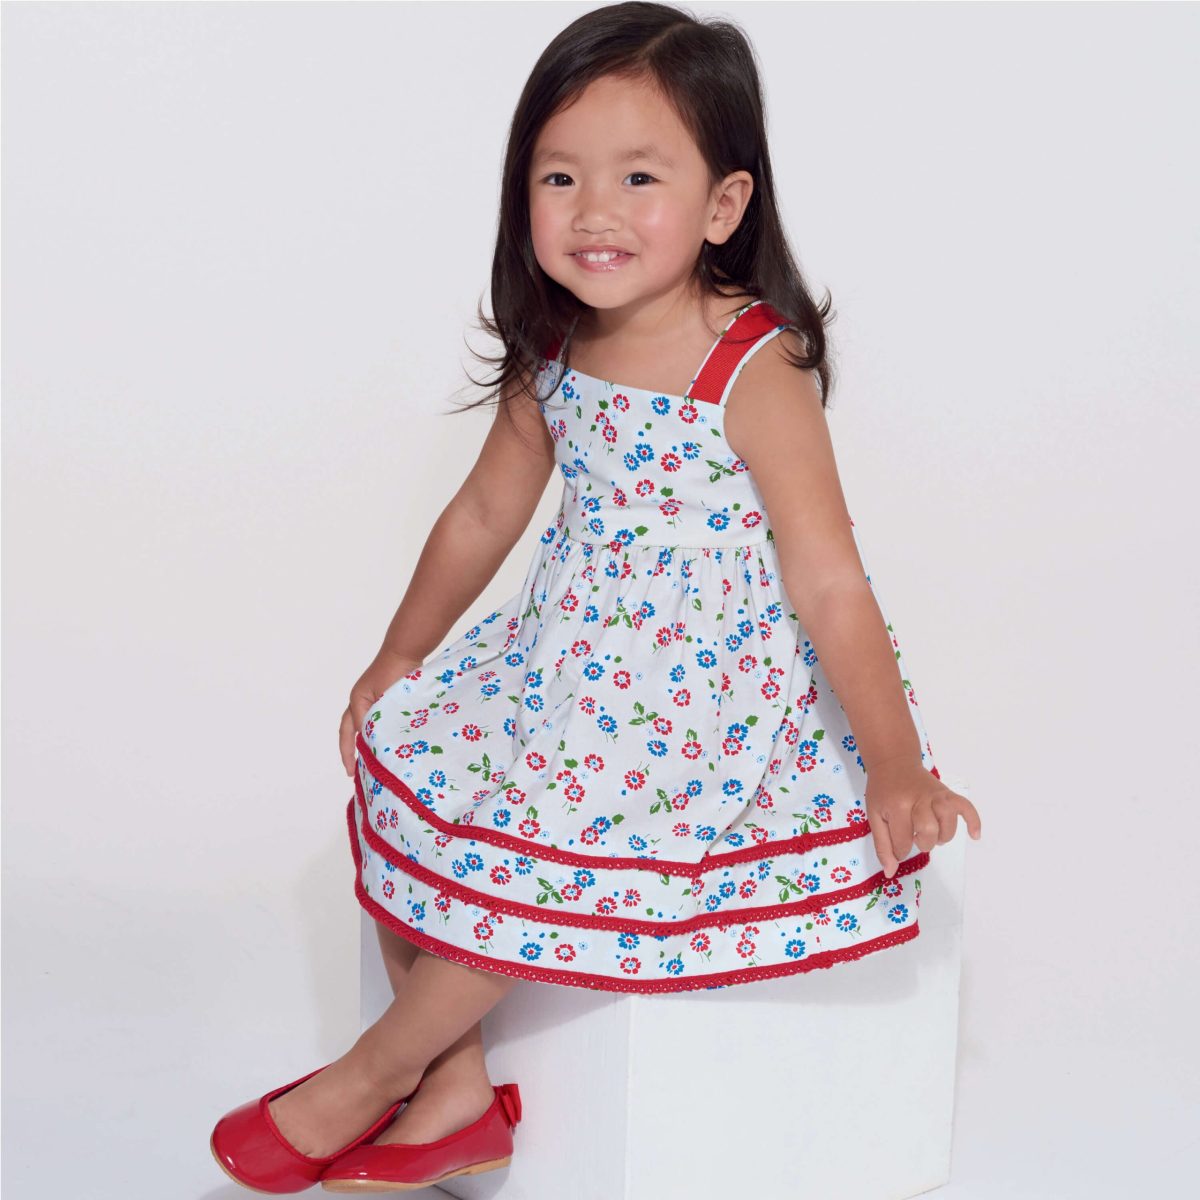 New Look Pattern N6610 Toddlers' Dress